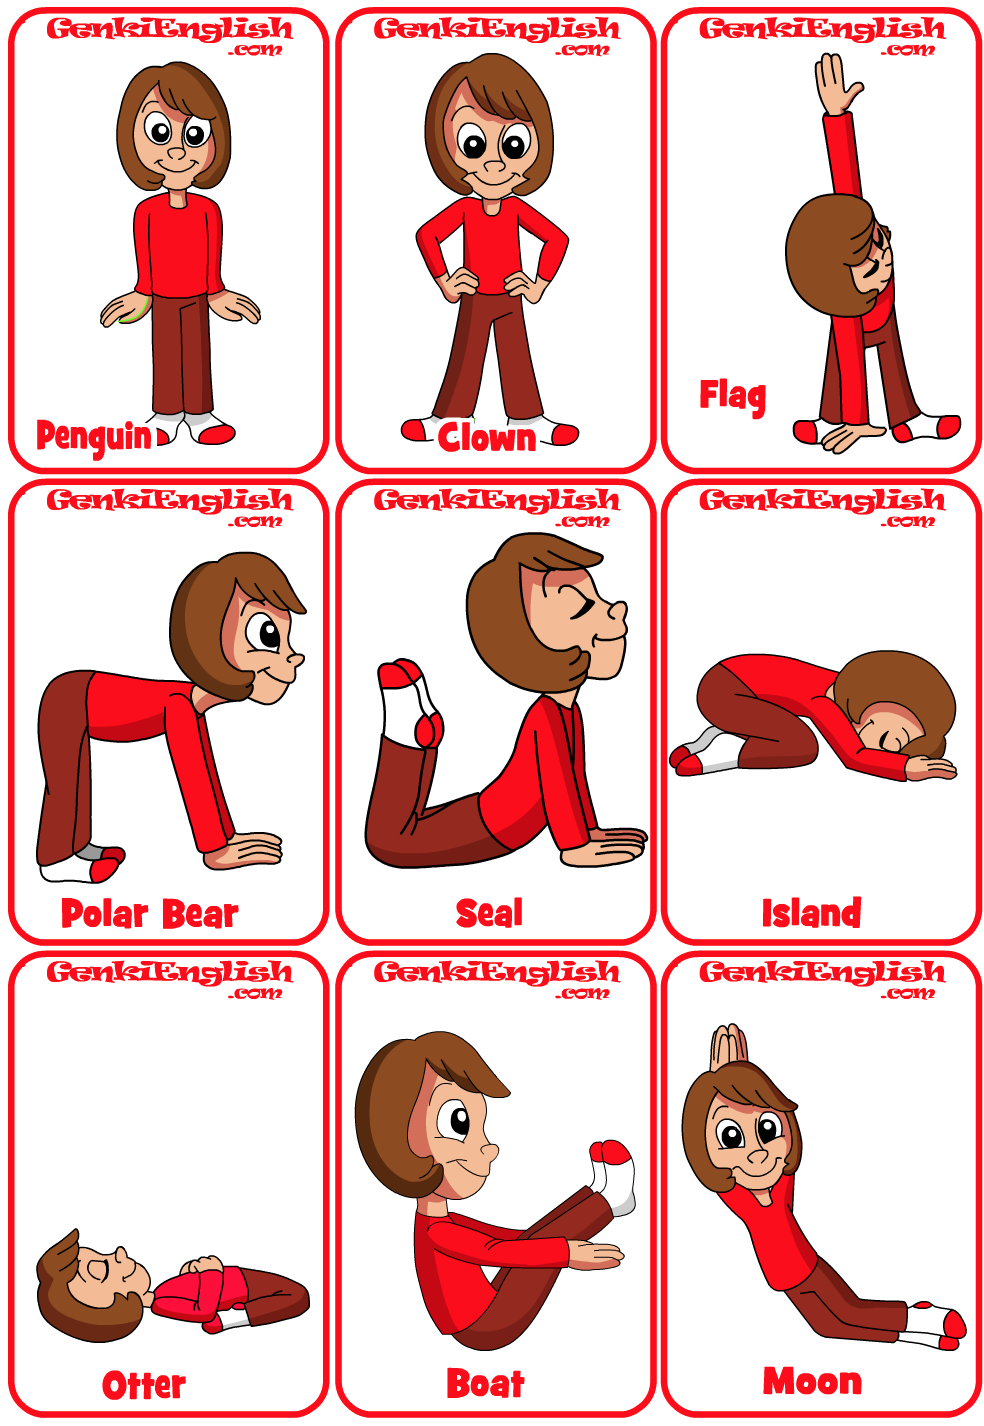 Genki English Yoga Poses Minicards